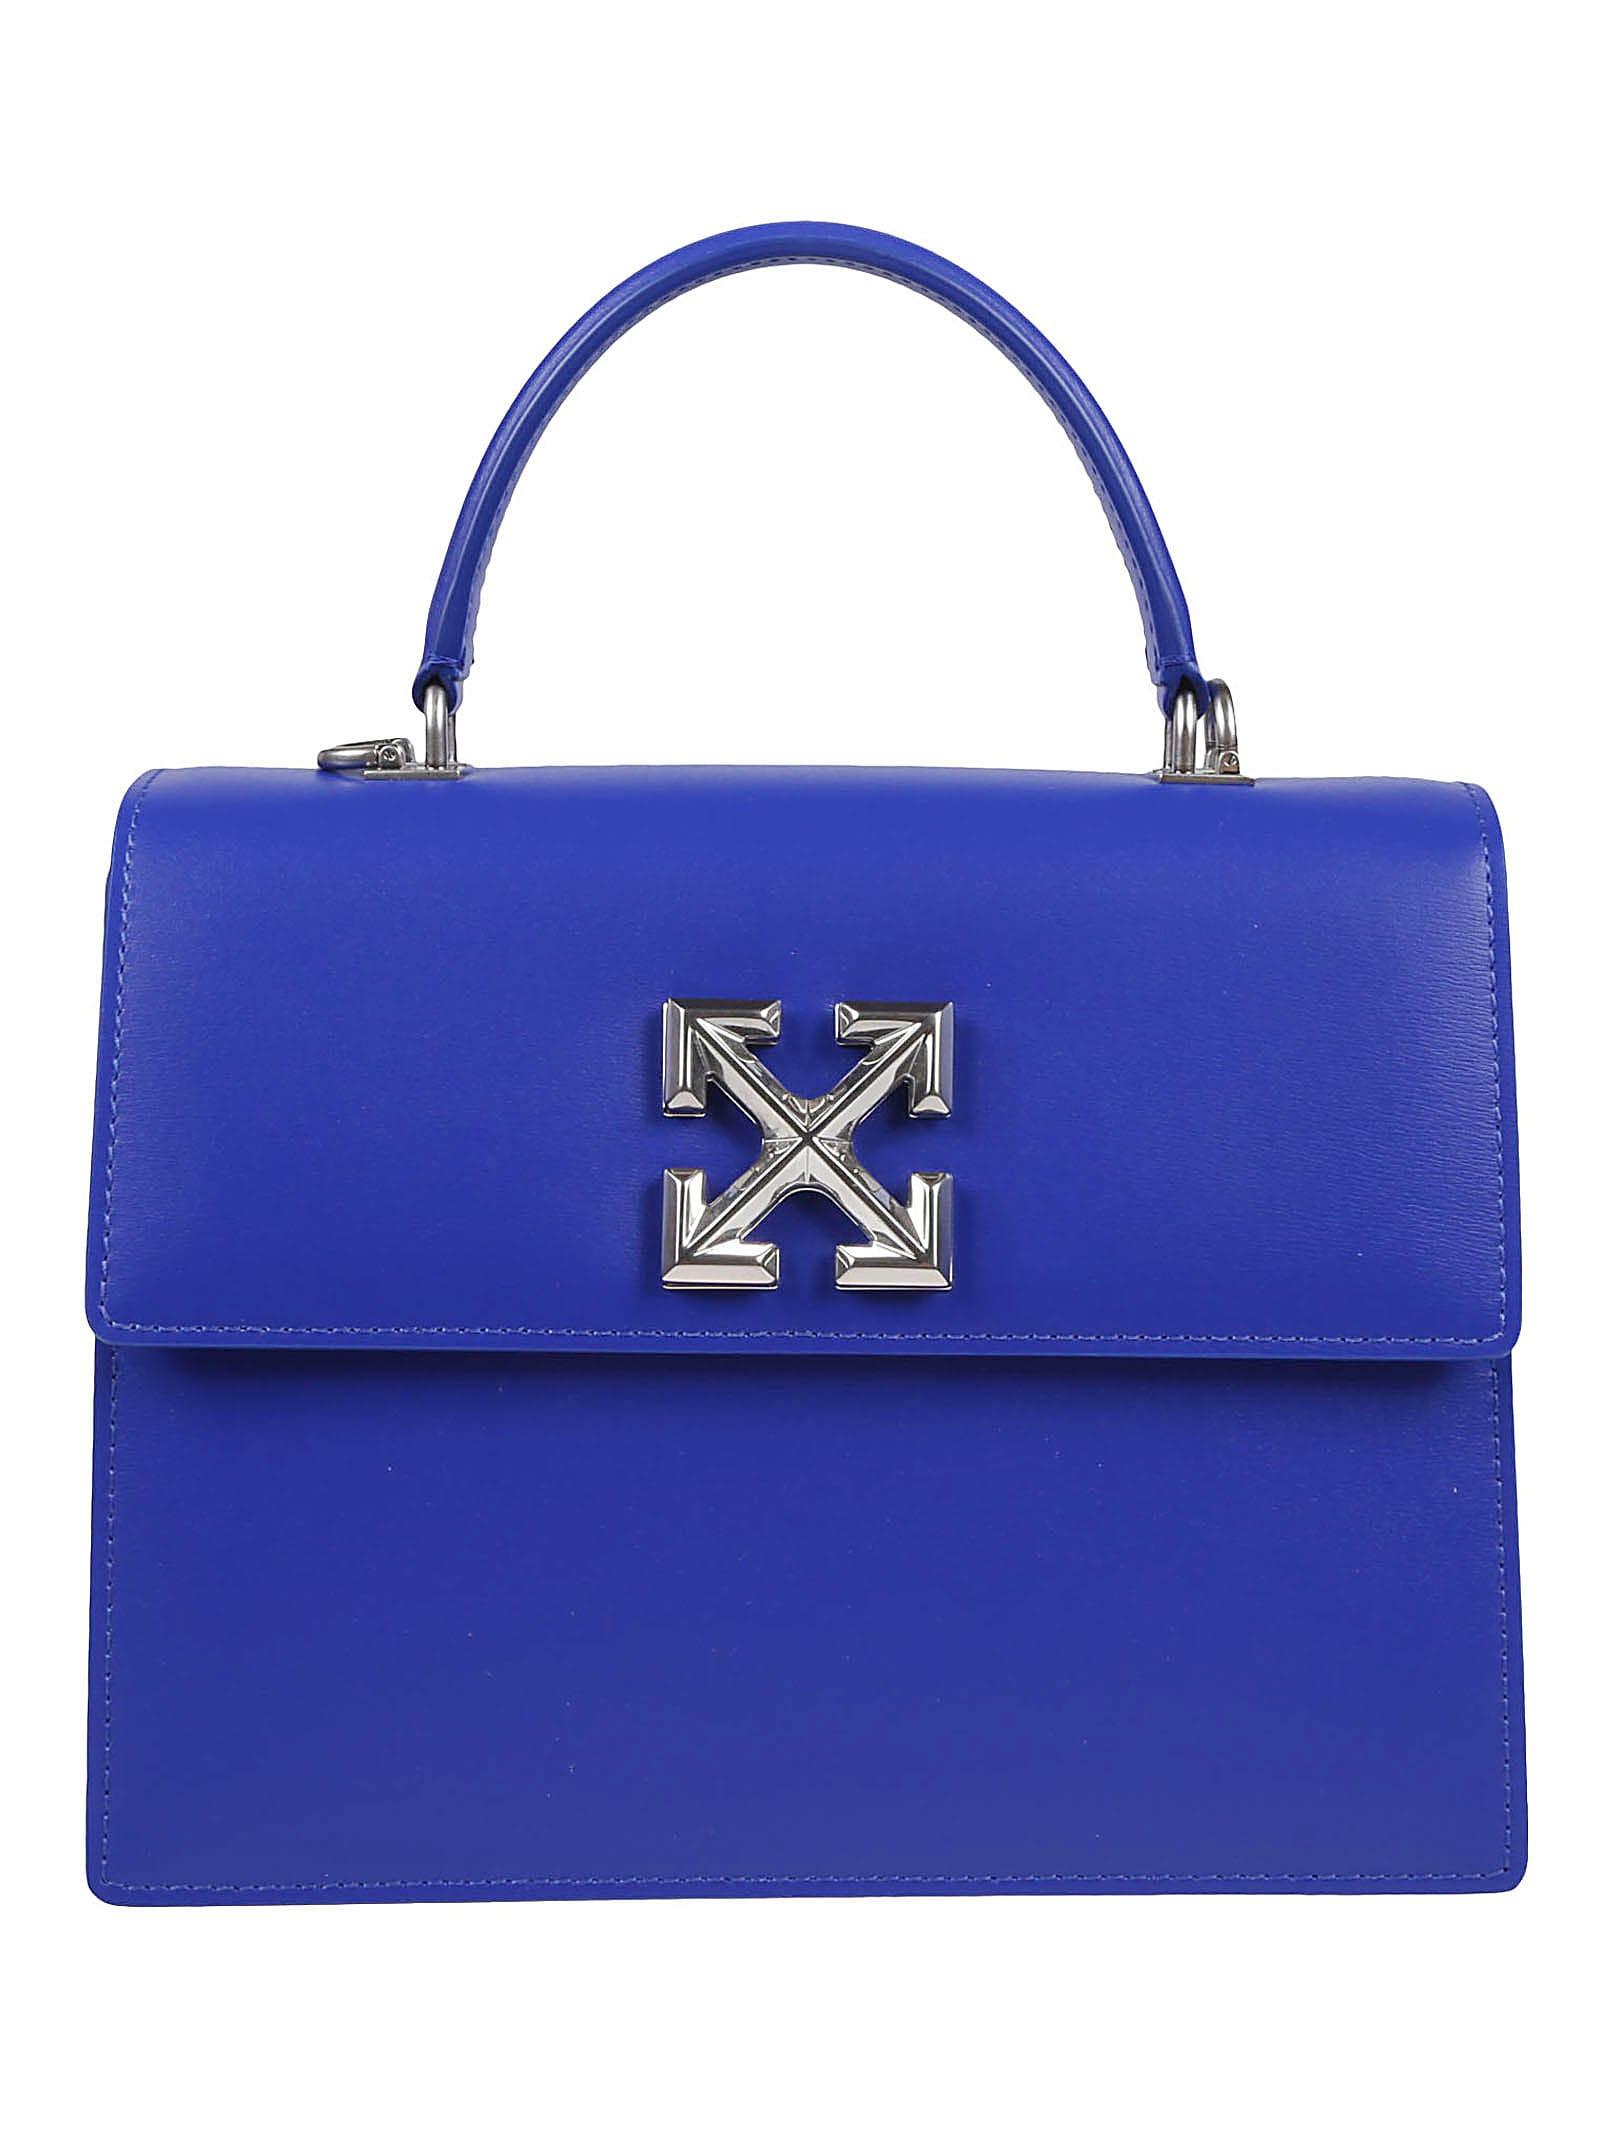 Off-White c/o Virgil Abloh Jitney 2.8 Top Handle Bag in Blue | Lyst UK